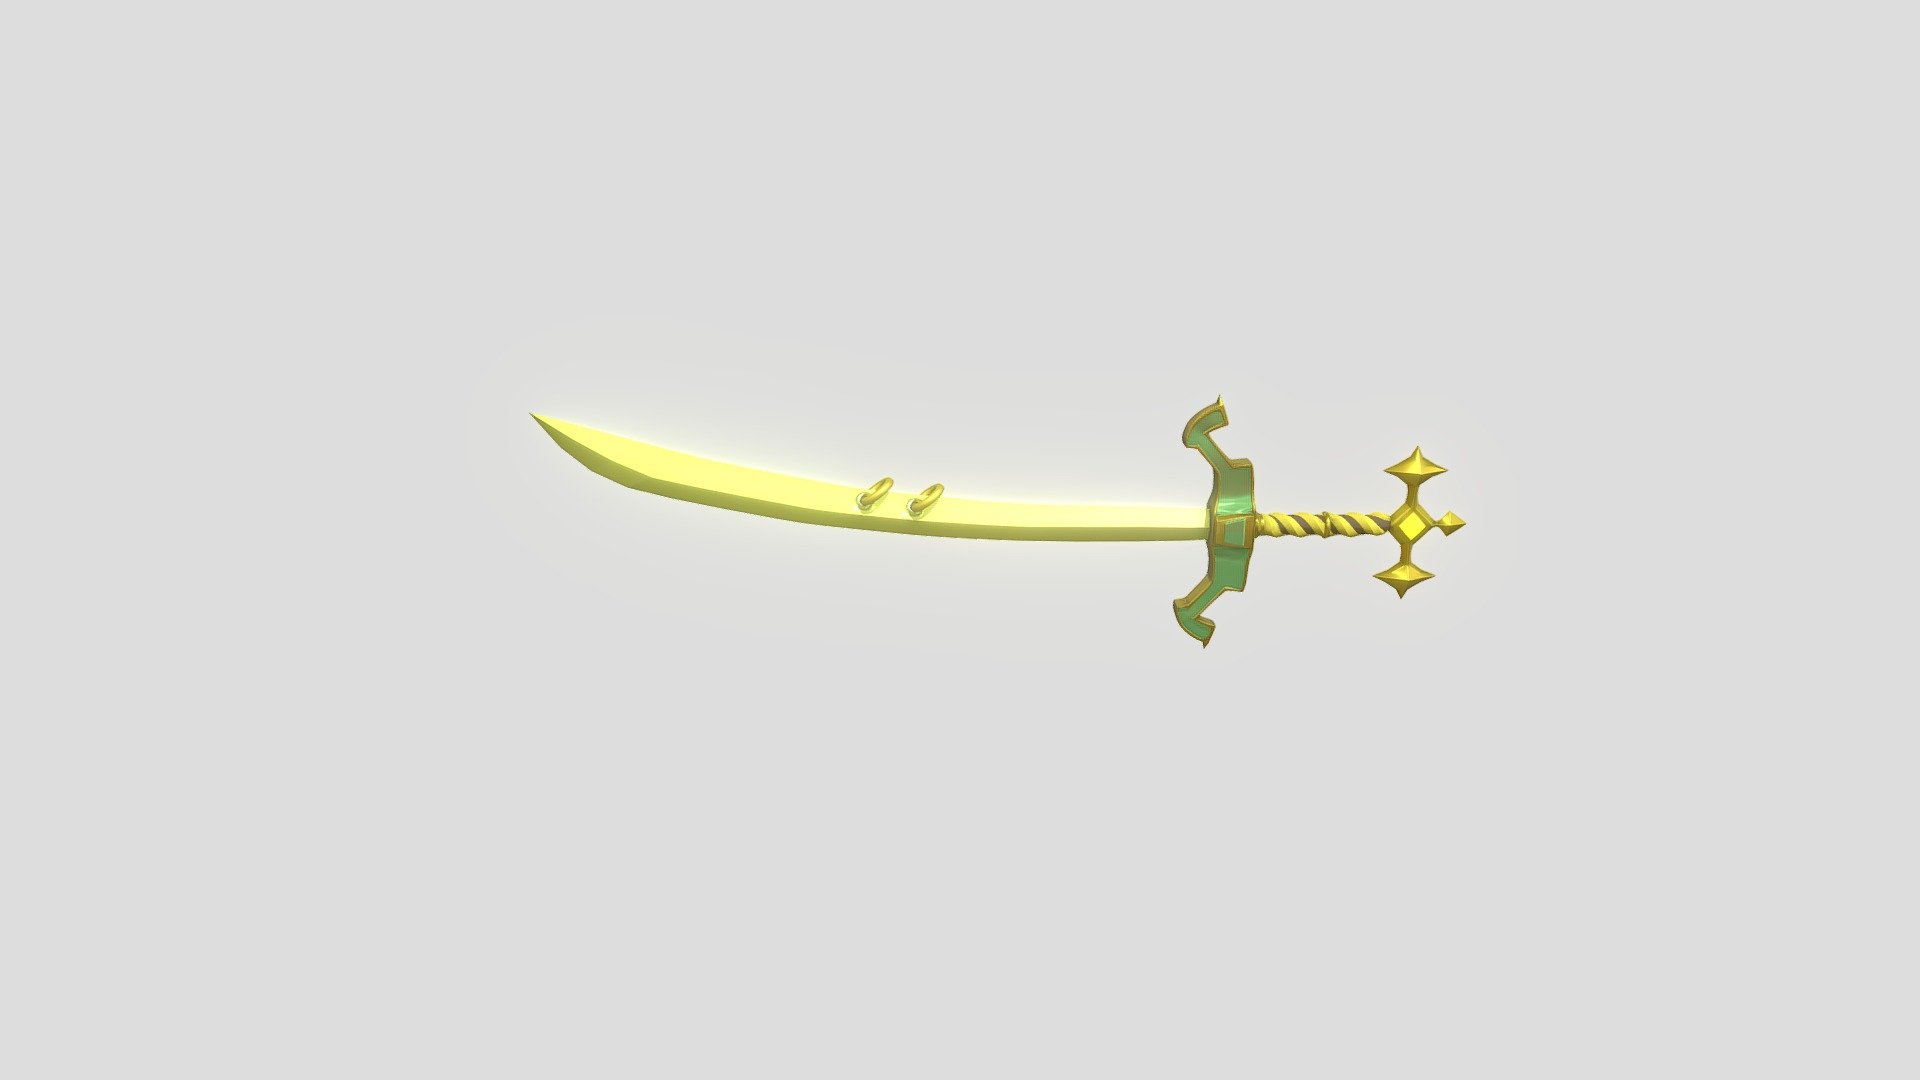 Master Yi's Sword